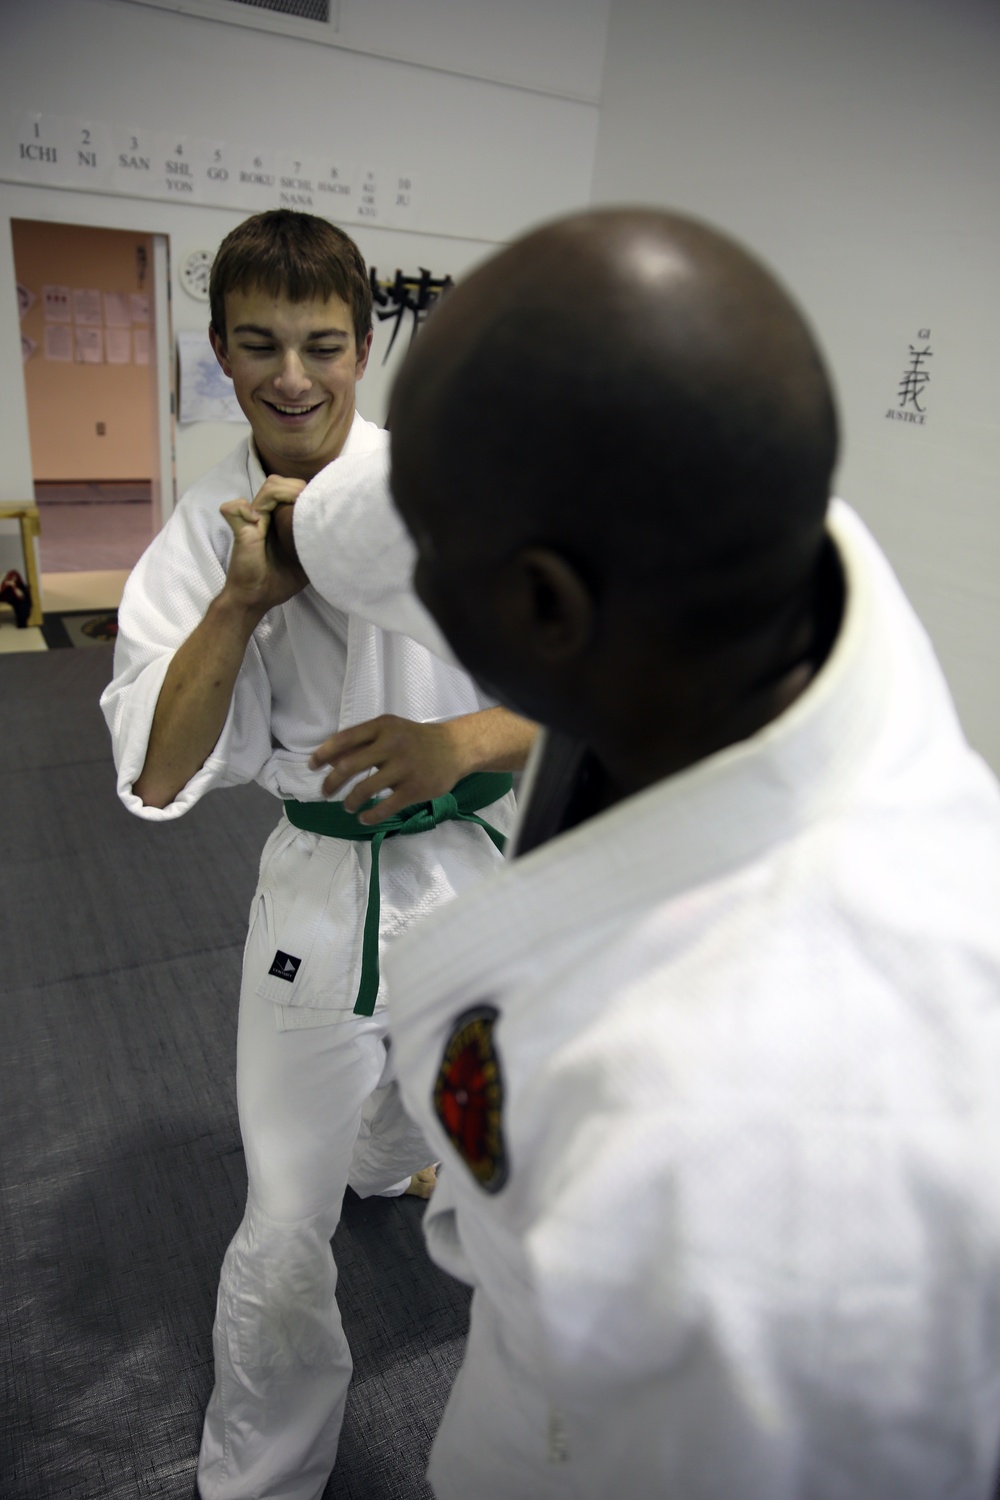 Jujitsu students prove strength through pain